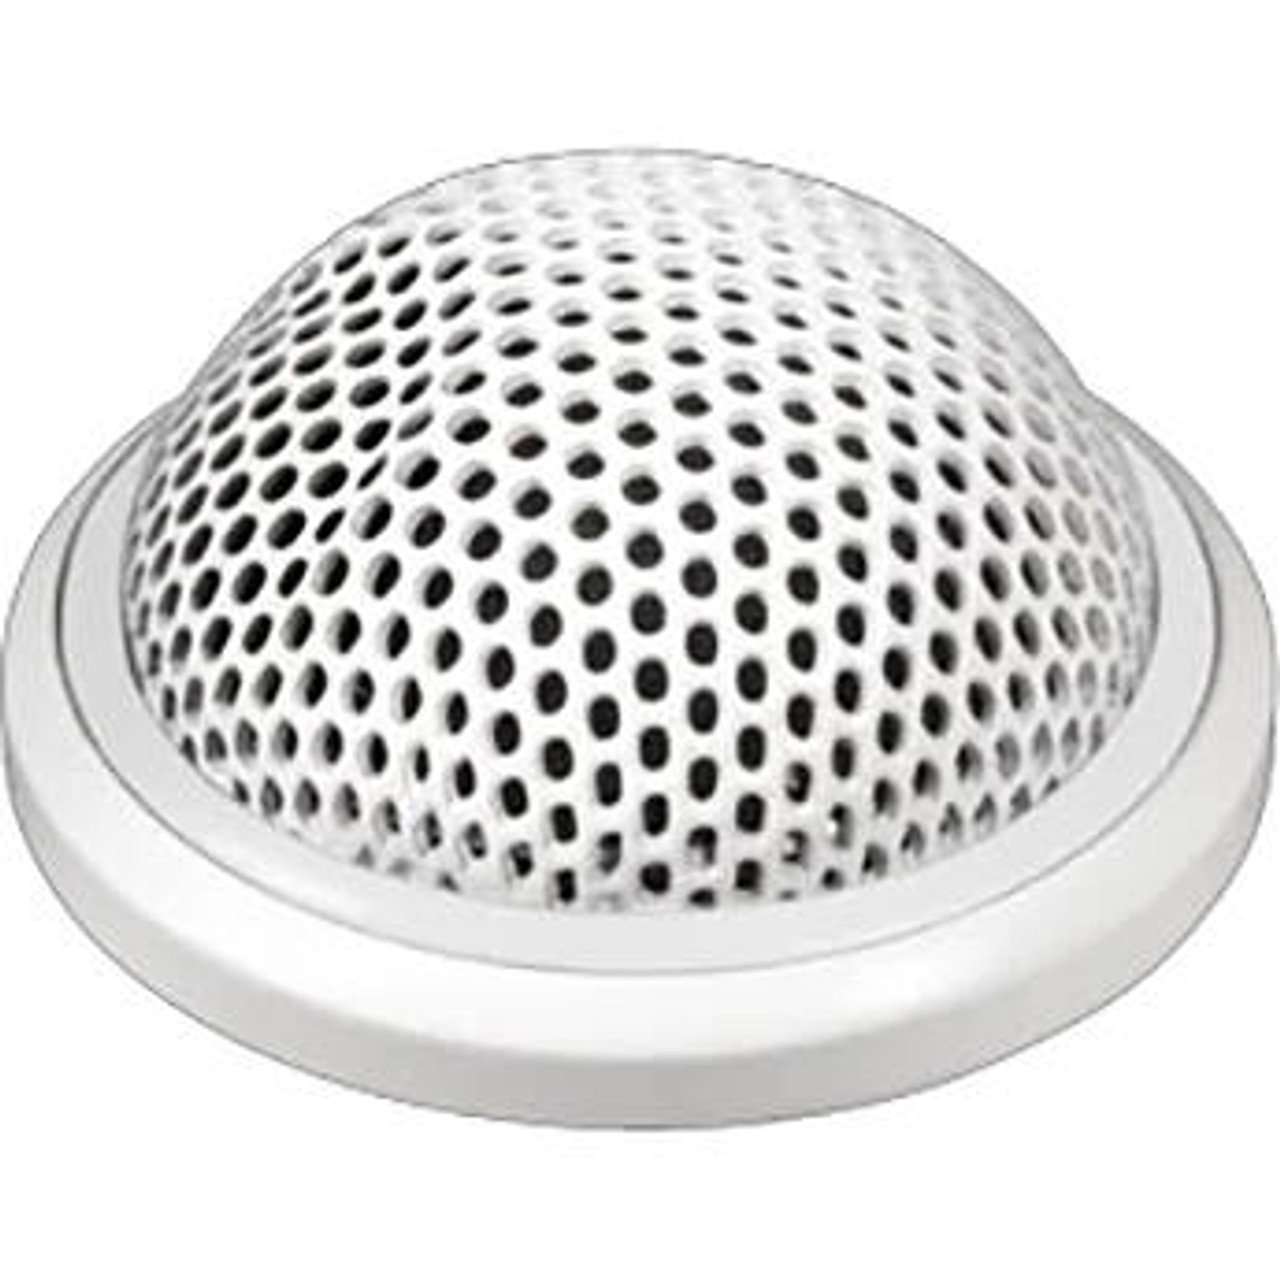 Shure MX395W/C Microflex Low-Profile Cardioid Boundary Microphone for Installs (White) (MX395W/C)